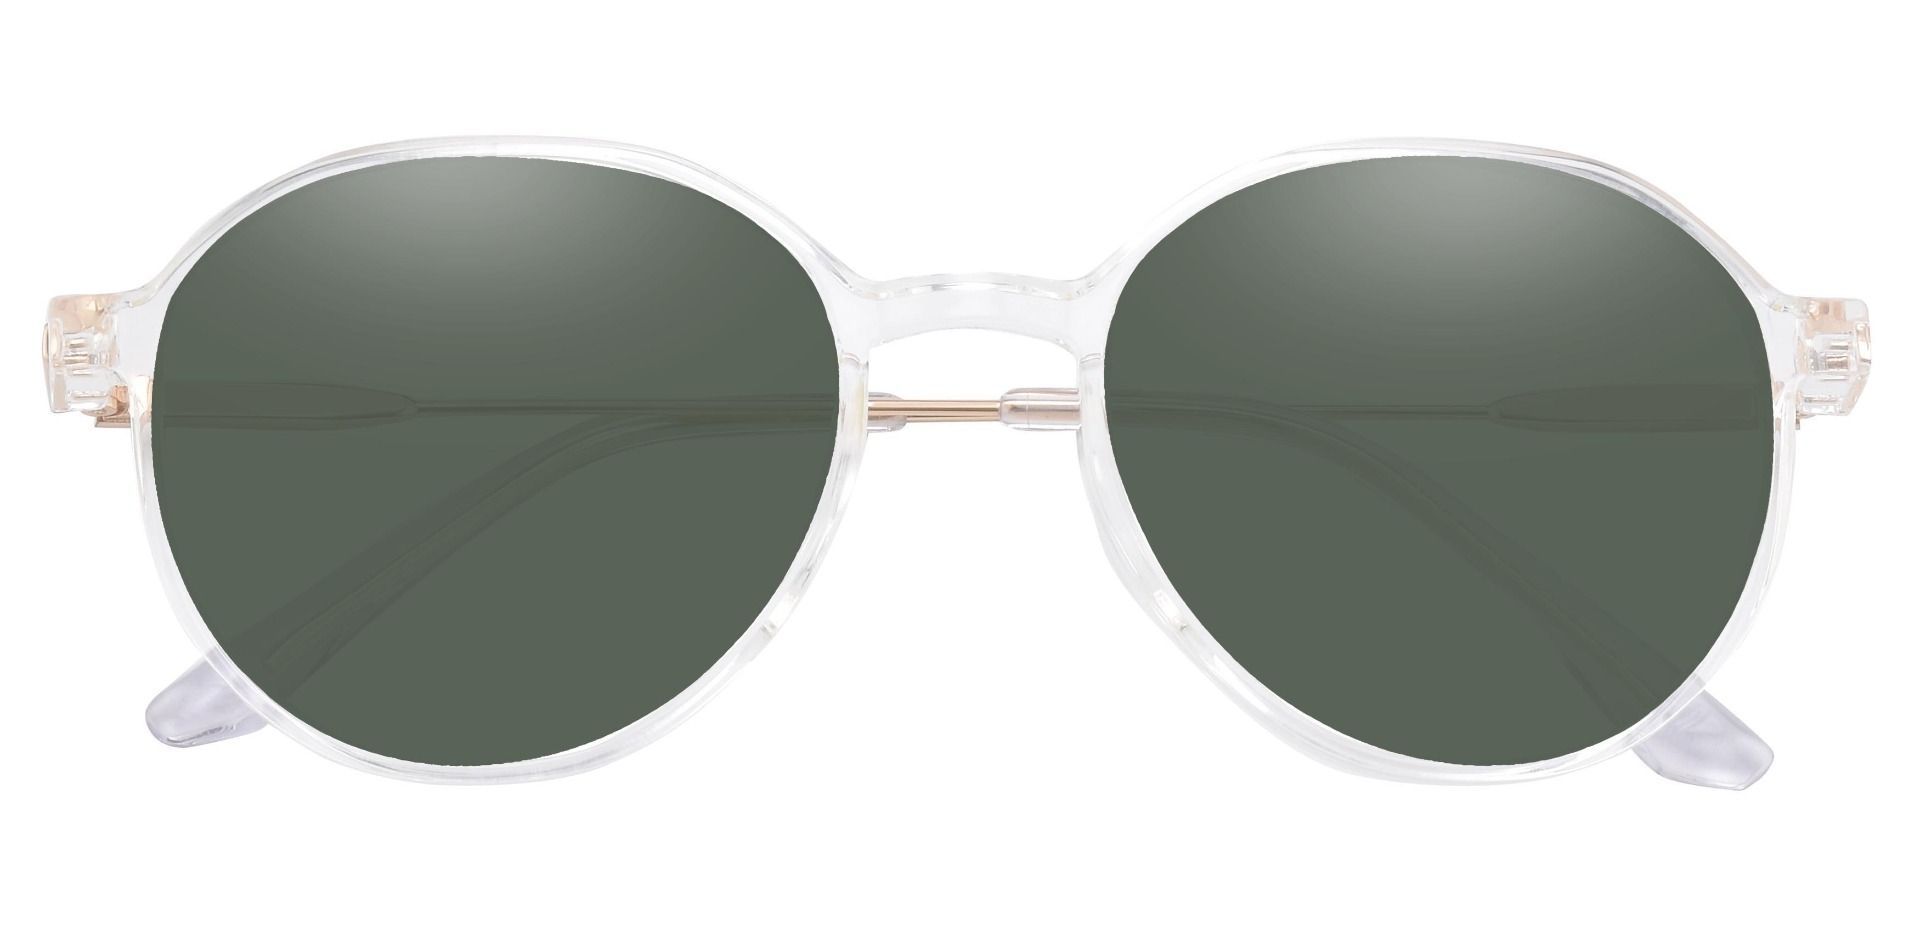 Daytona Geometric Progressive Sunglasses - Clear Frame With Green Lenses